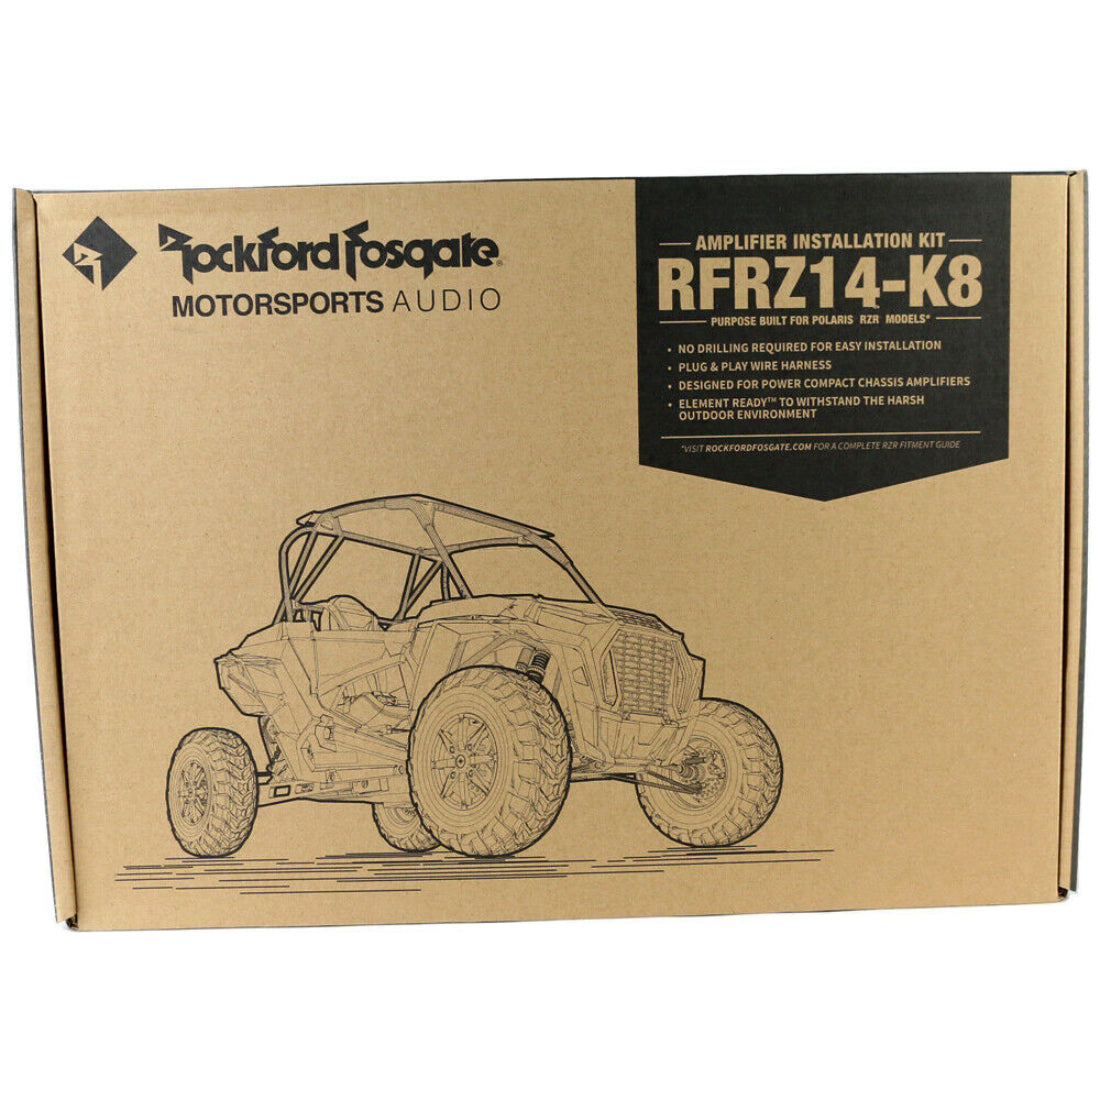 Rockford Fosgate RFRZ14-K8 RZR Amp Kit and Mounting Plate 